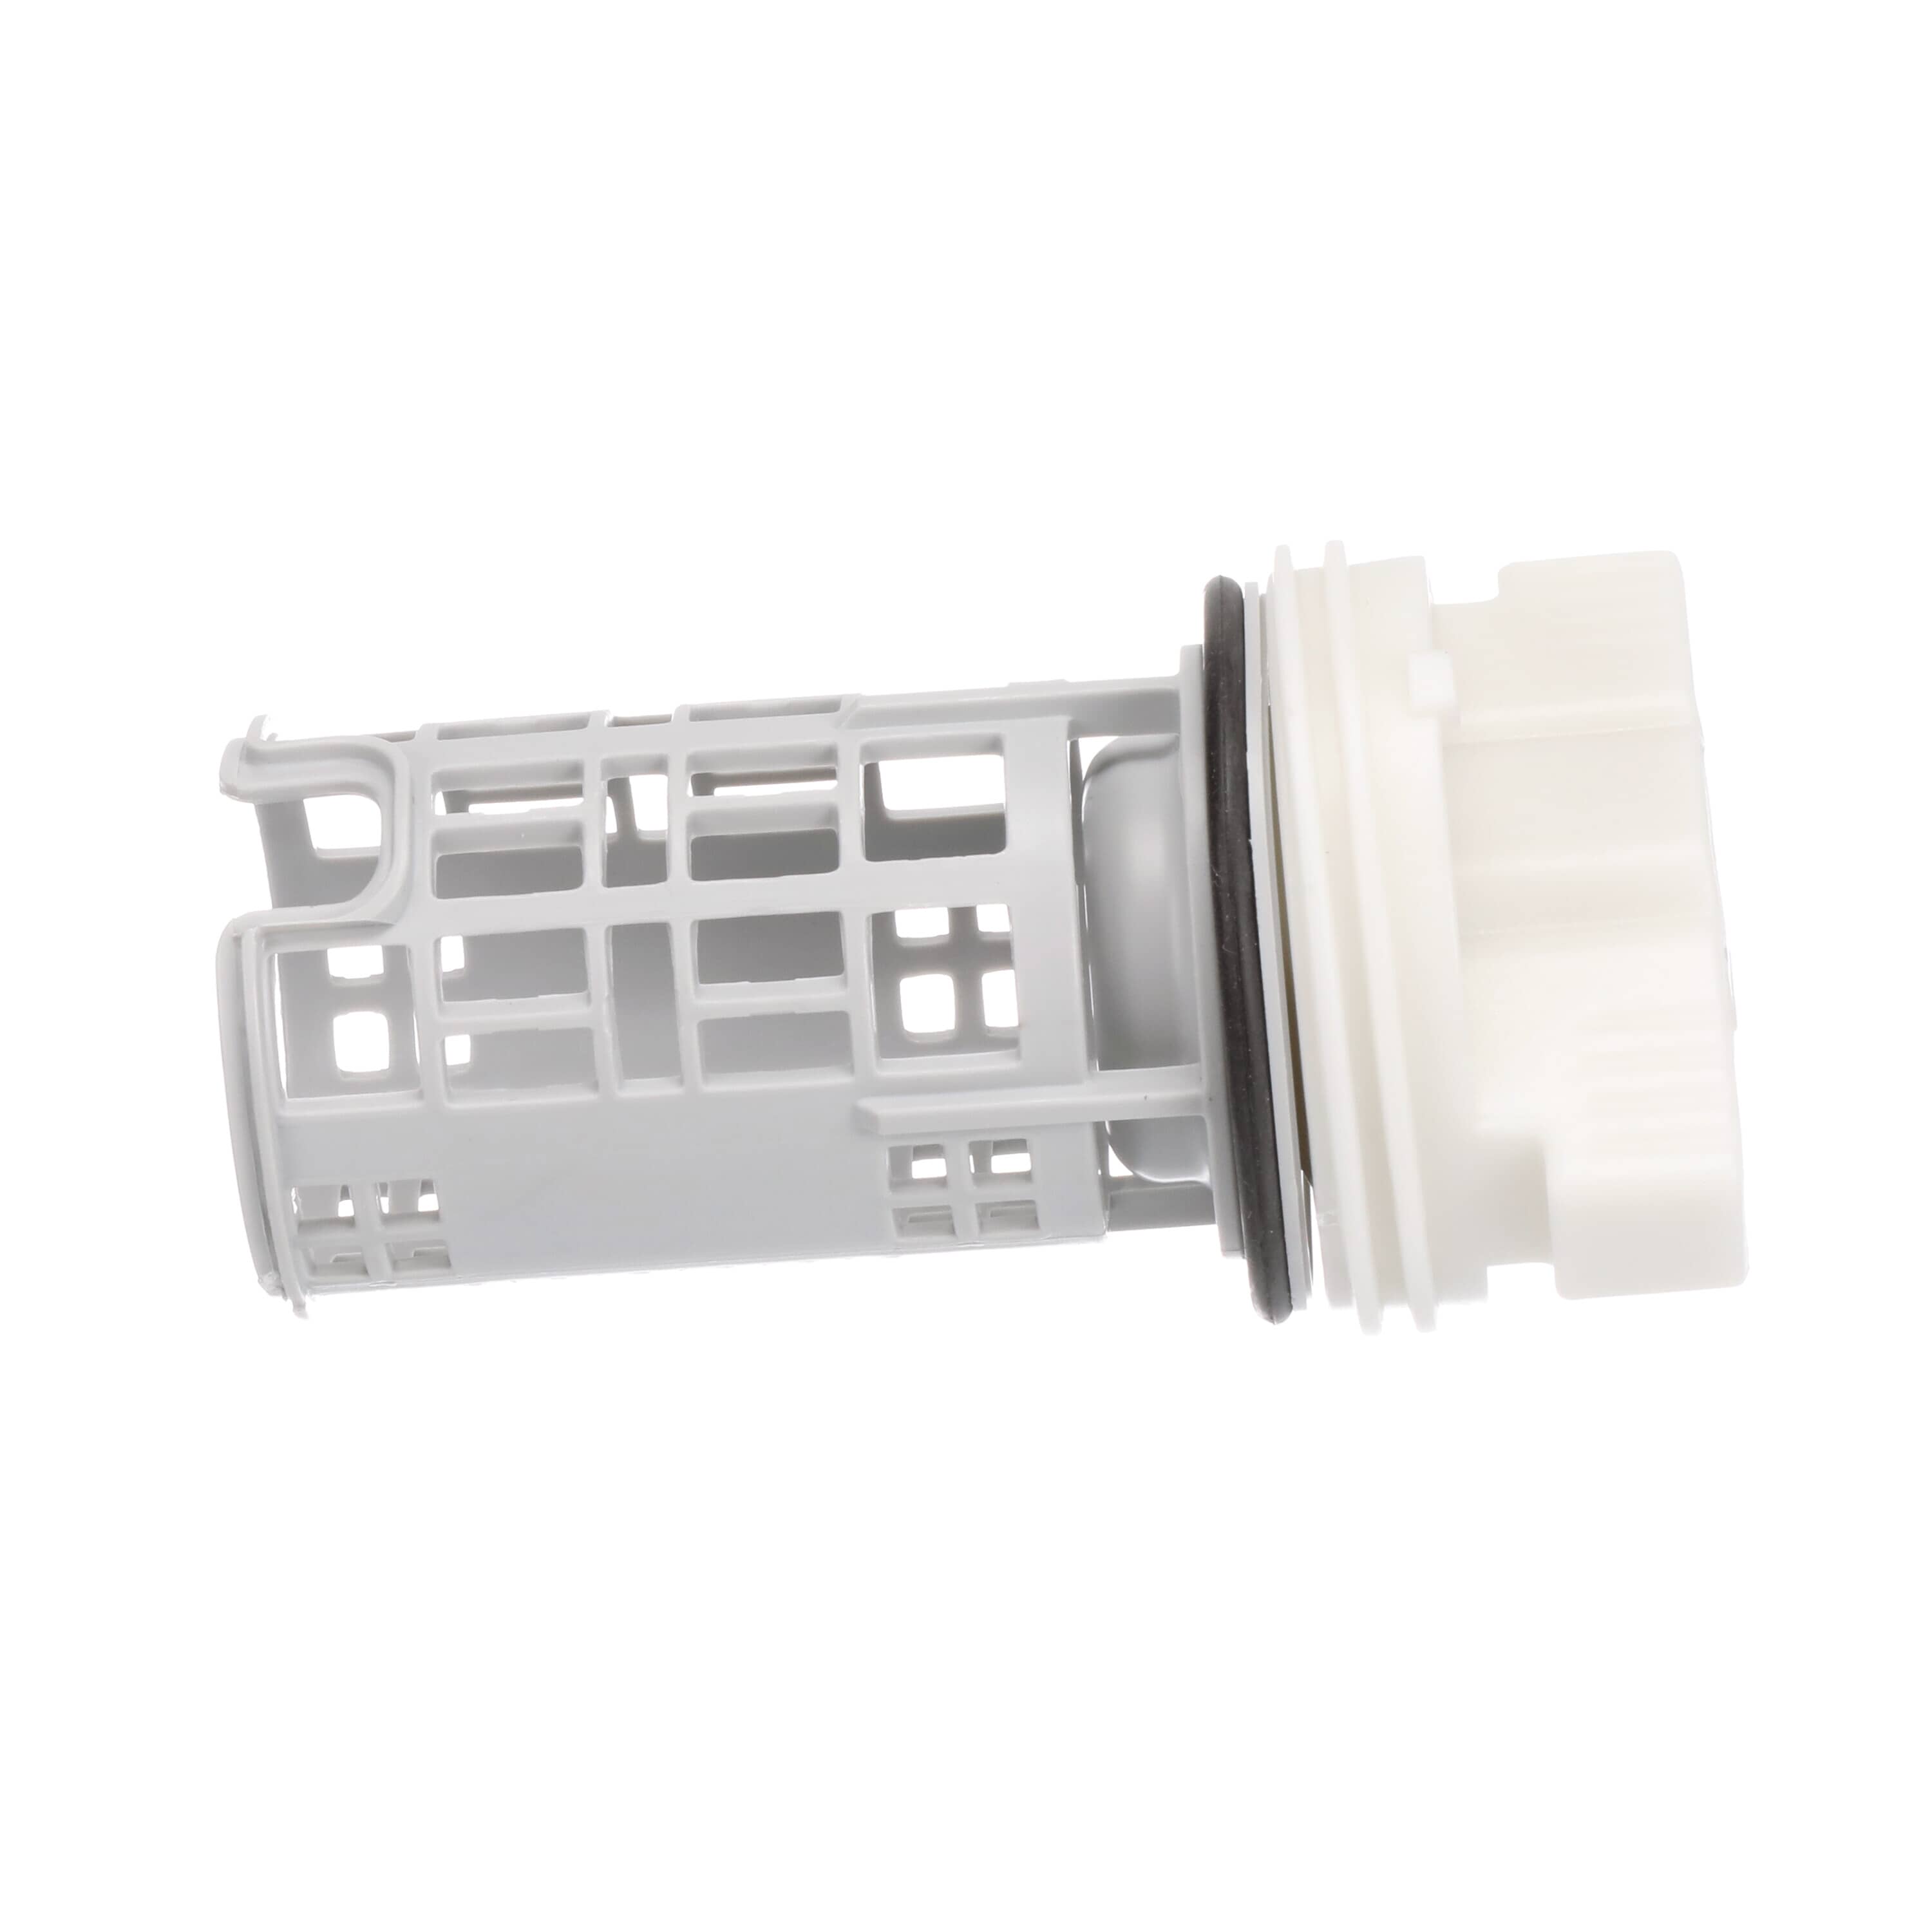 Samsung DC97-16991A Washer Drain Pump Filter - Samsung Parts USA